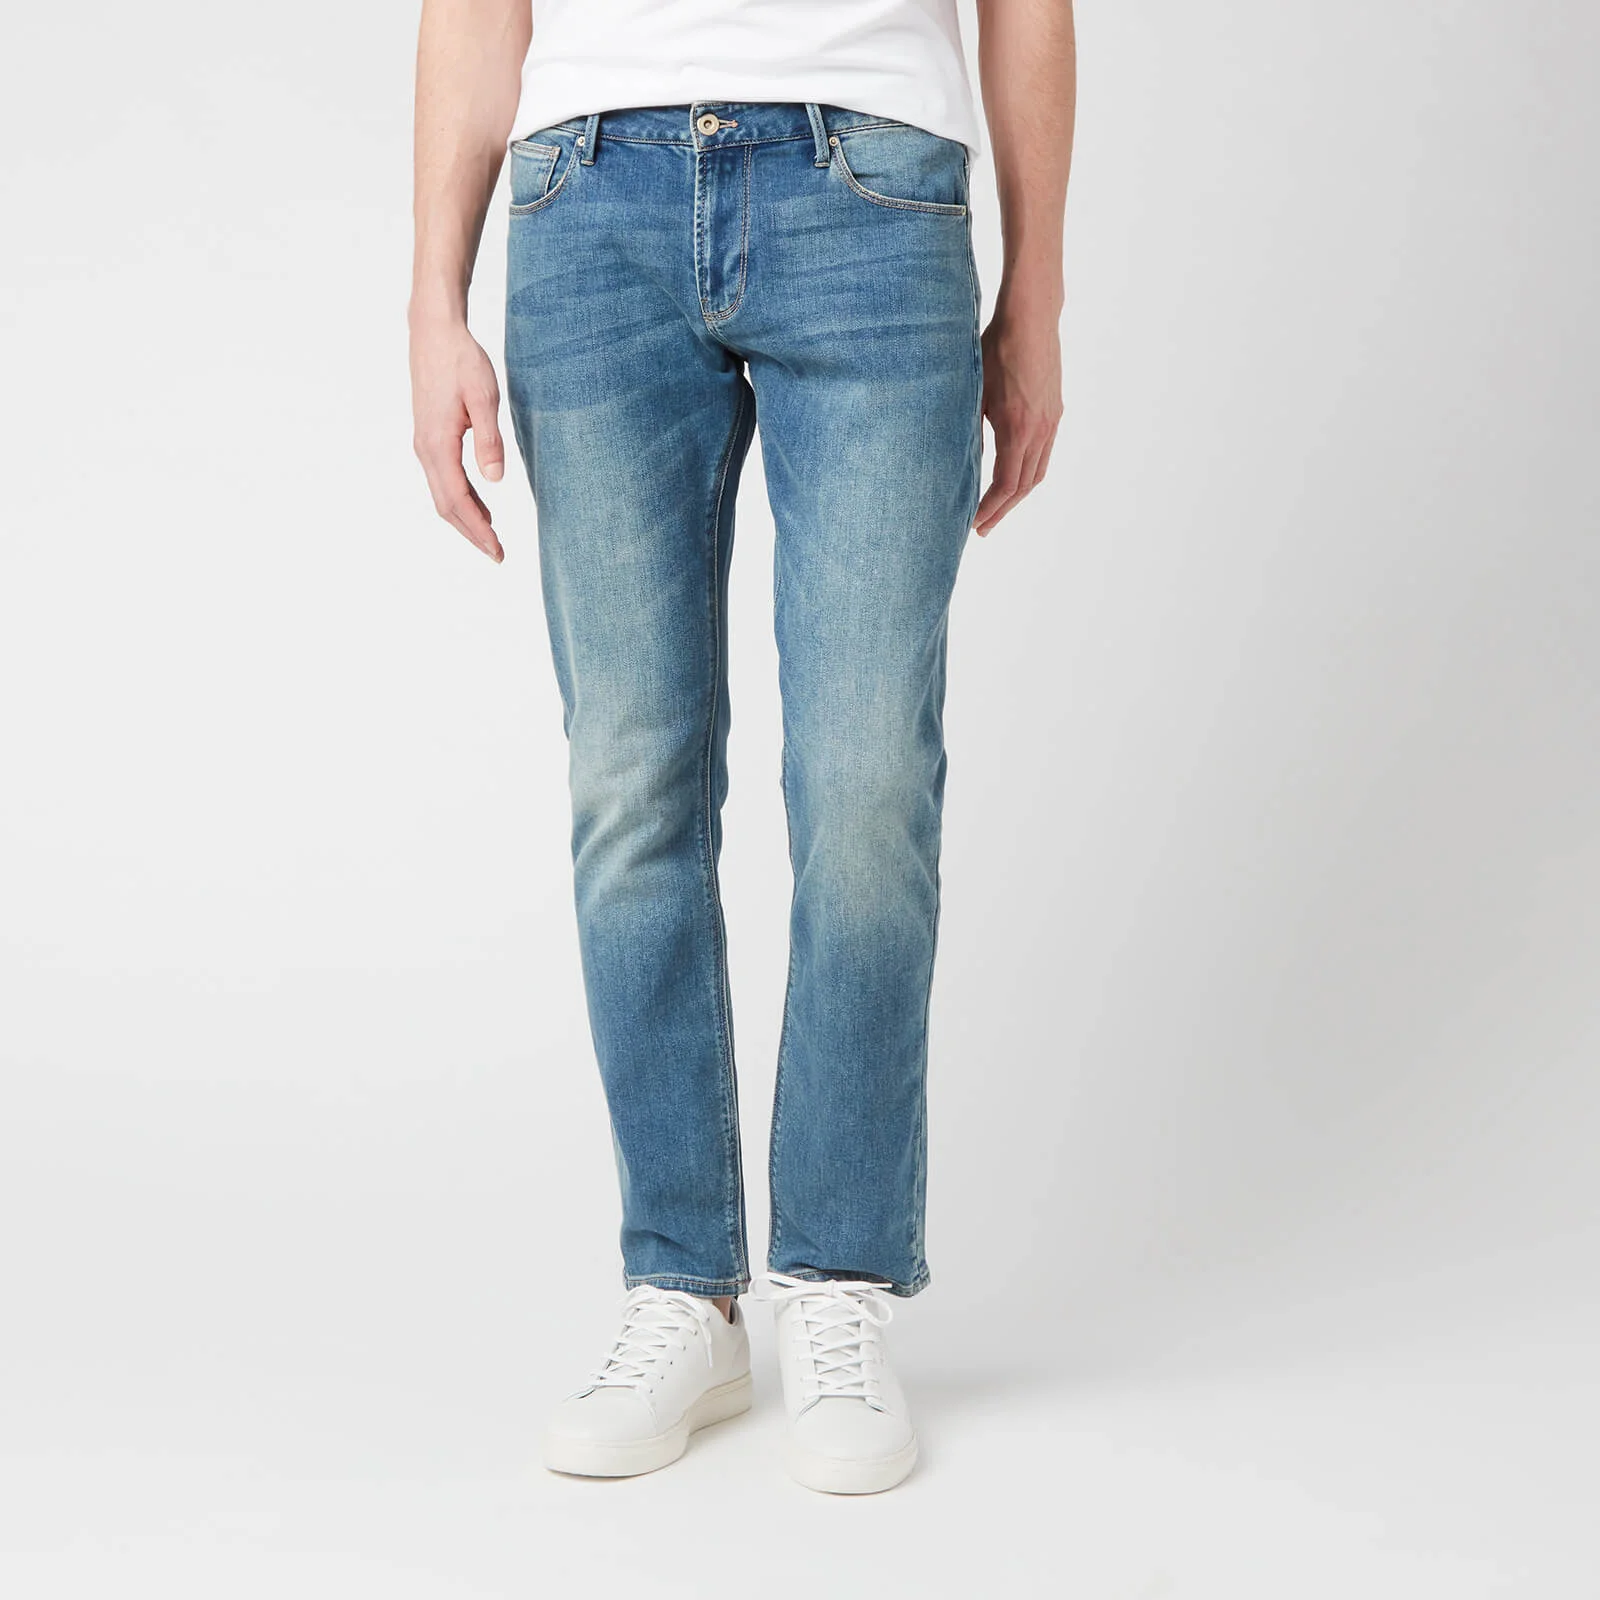 Emporio Armani Men's Slim Fit Jeans - Denim Blue Mid Image 1